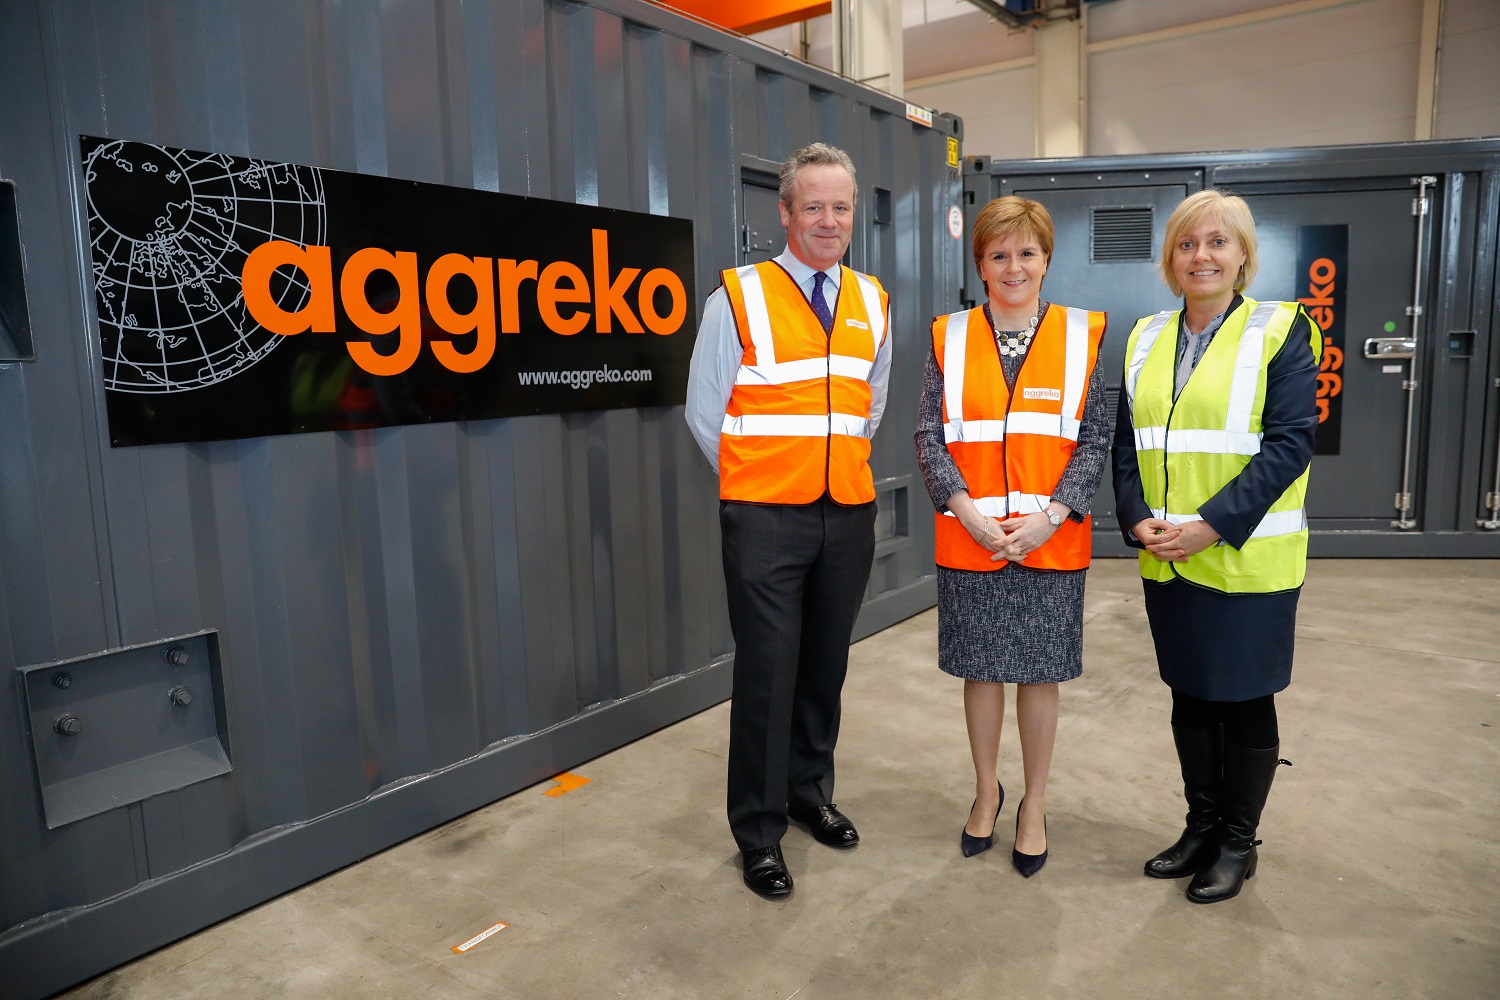 First Minister Nicola Sturgeon (centre) visiting Aggreko in Dumbarton, Scotland.